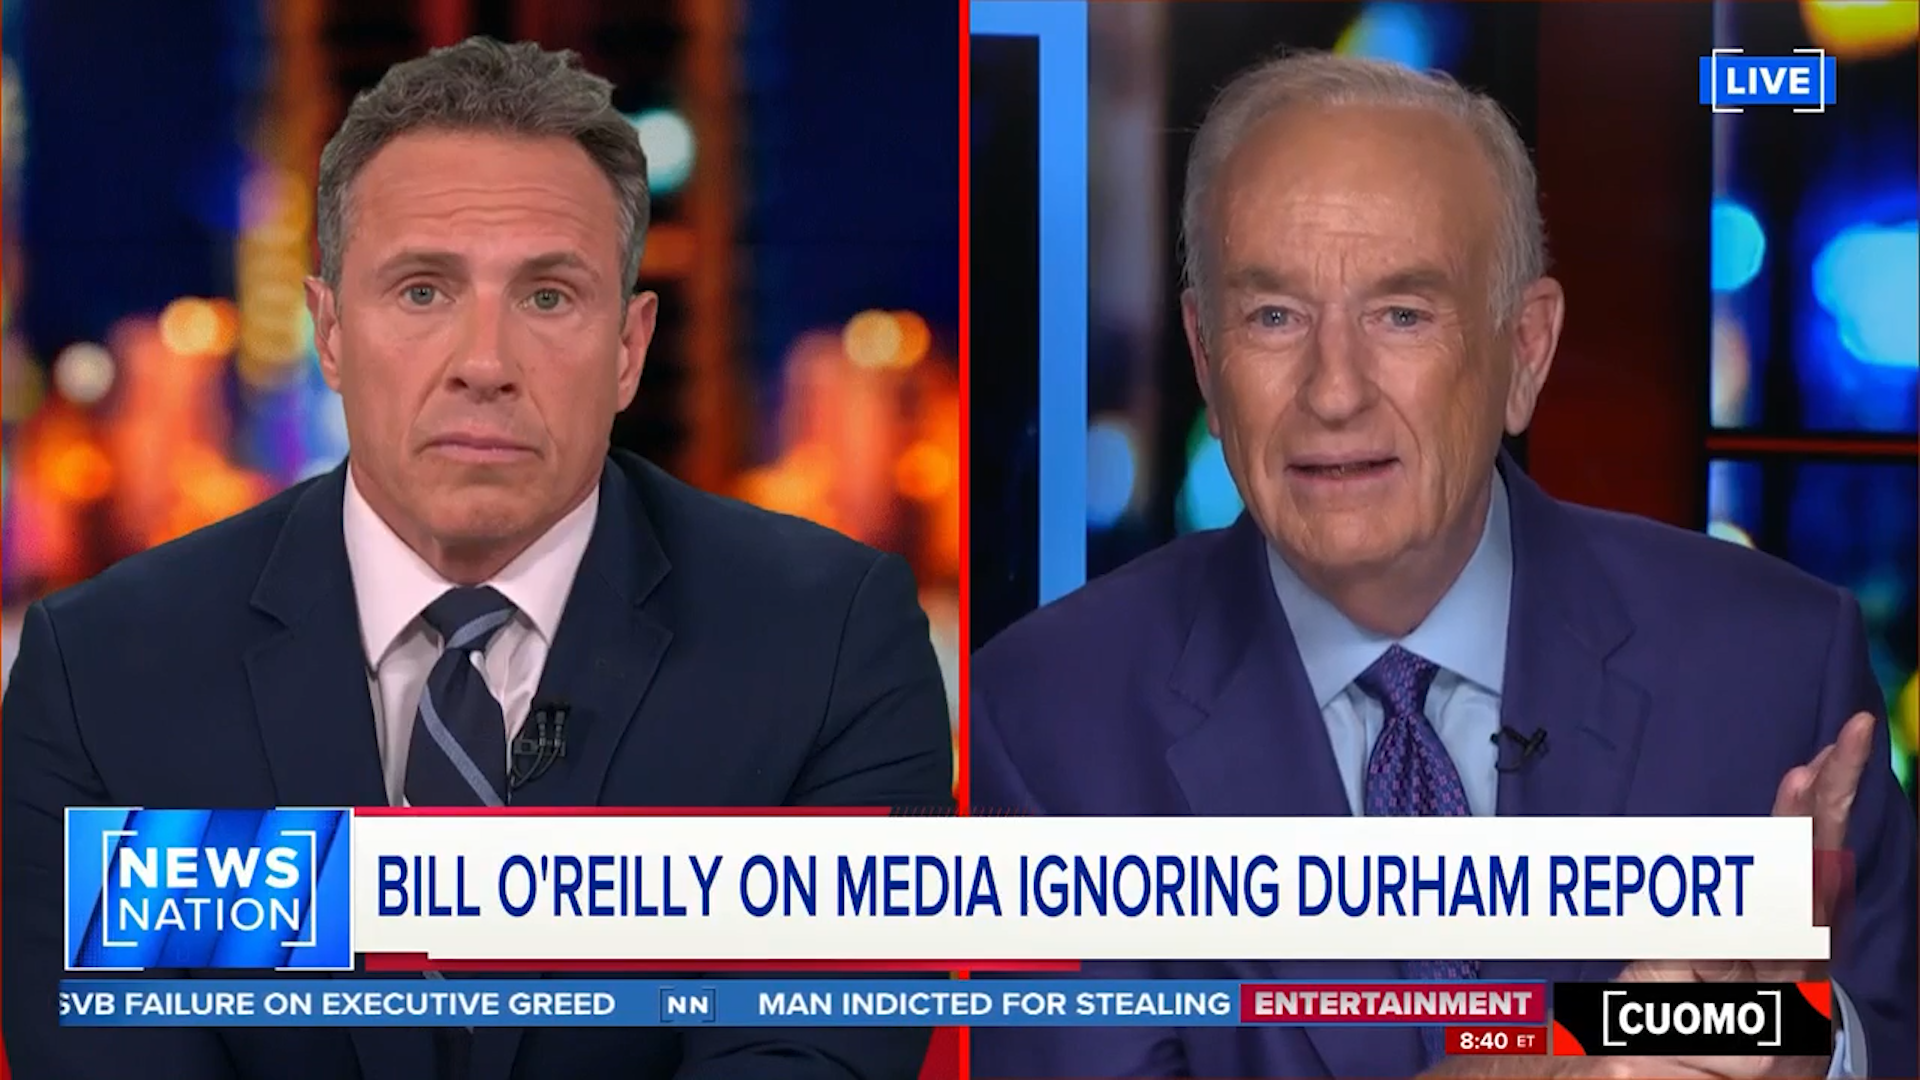 O'Reilly & Cuomo Debate the Durham Report, the Media's Reaction